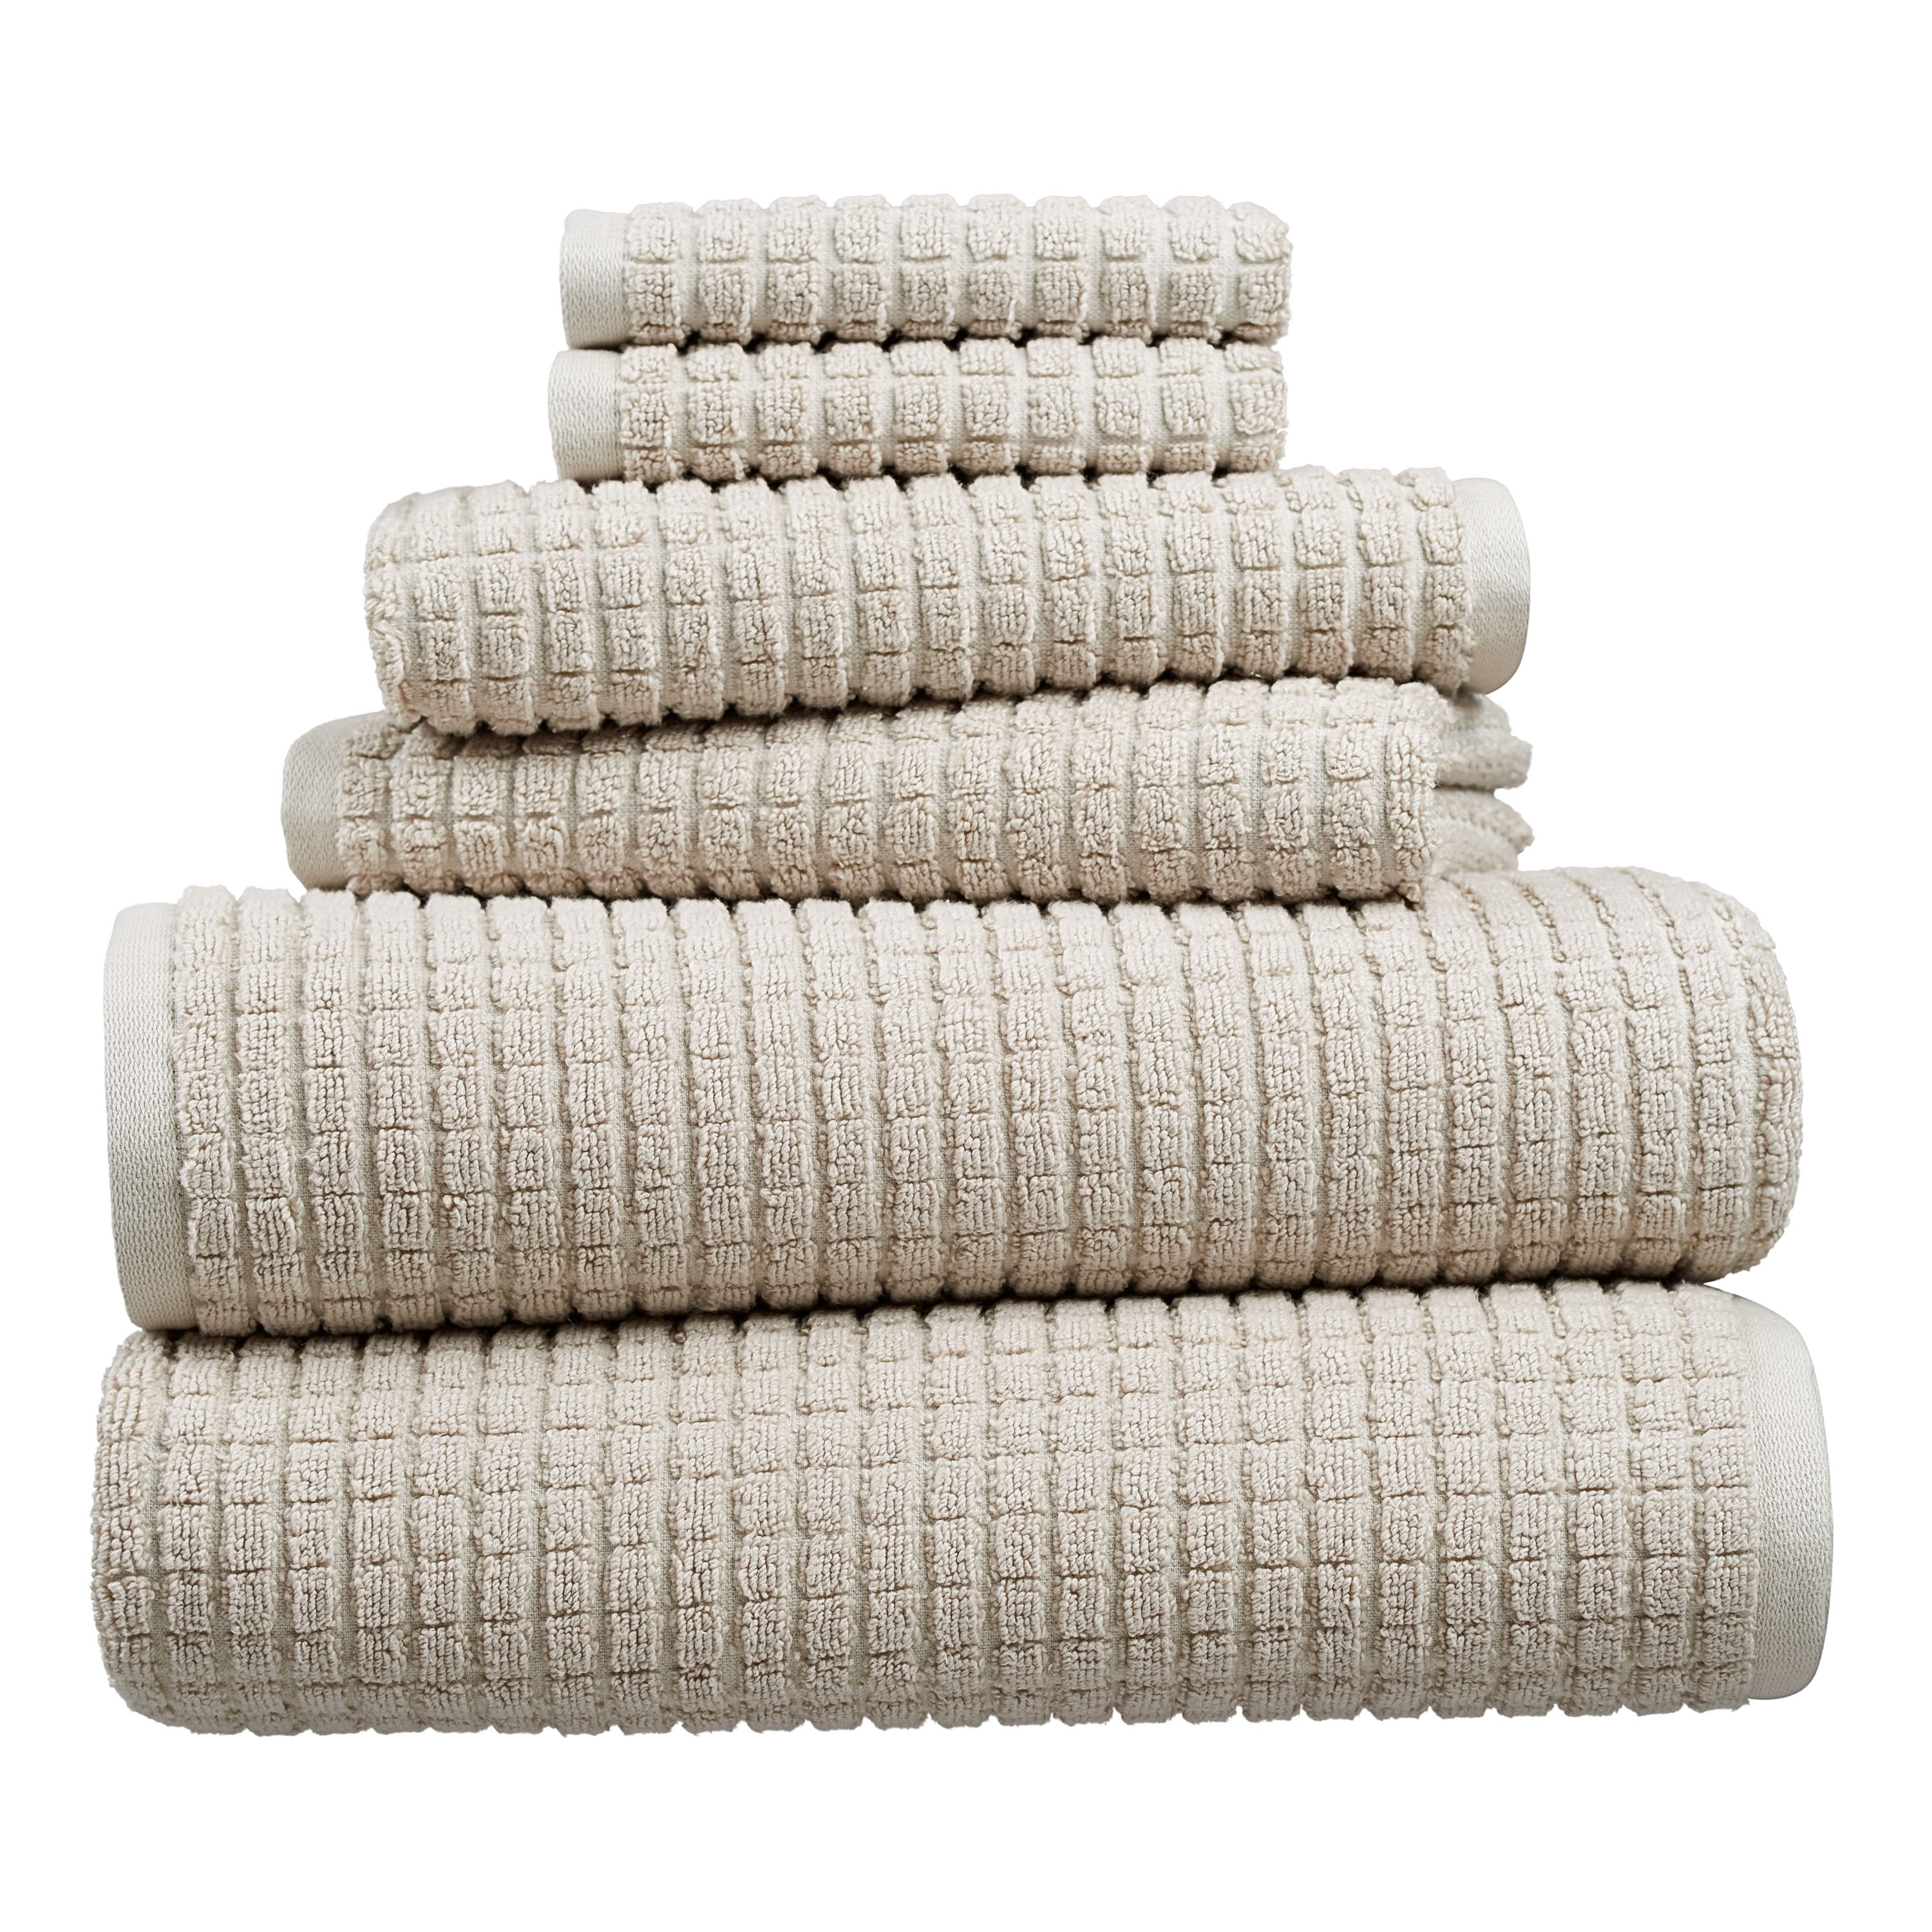 ⚡️Superior eLuxury 900GSM Egyptian Cotton 2pc Bath Towel Set - Charcoal  (30x55)